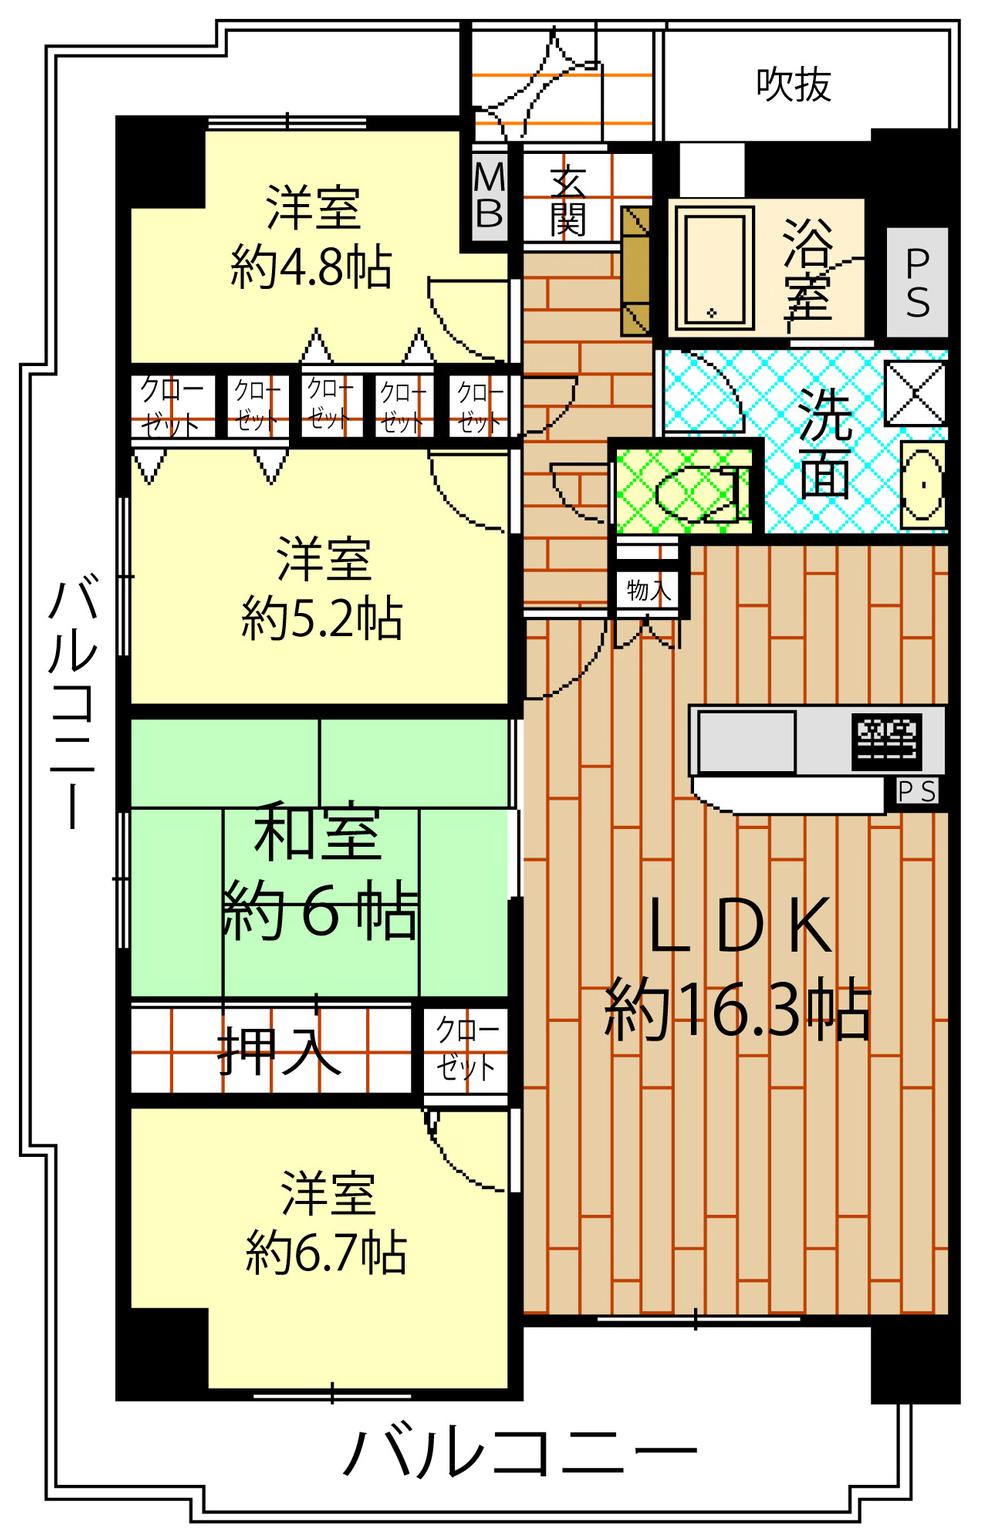 Floor plan. 4LDK, Price 28.5 million yen, Footprint 83.8 sq m , Balcony area 23.55 sq m